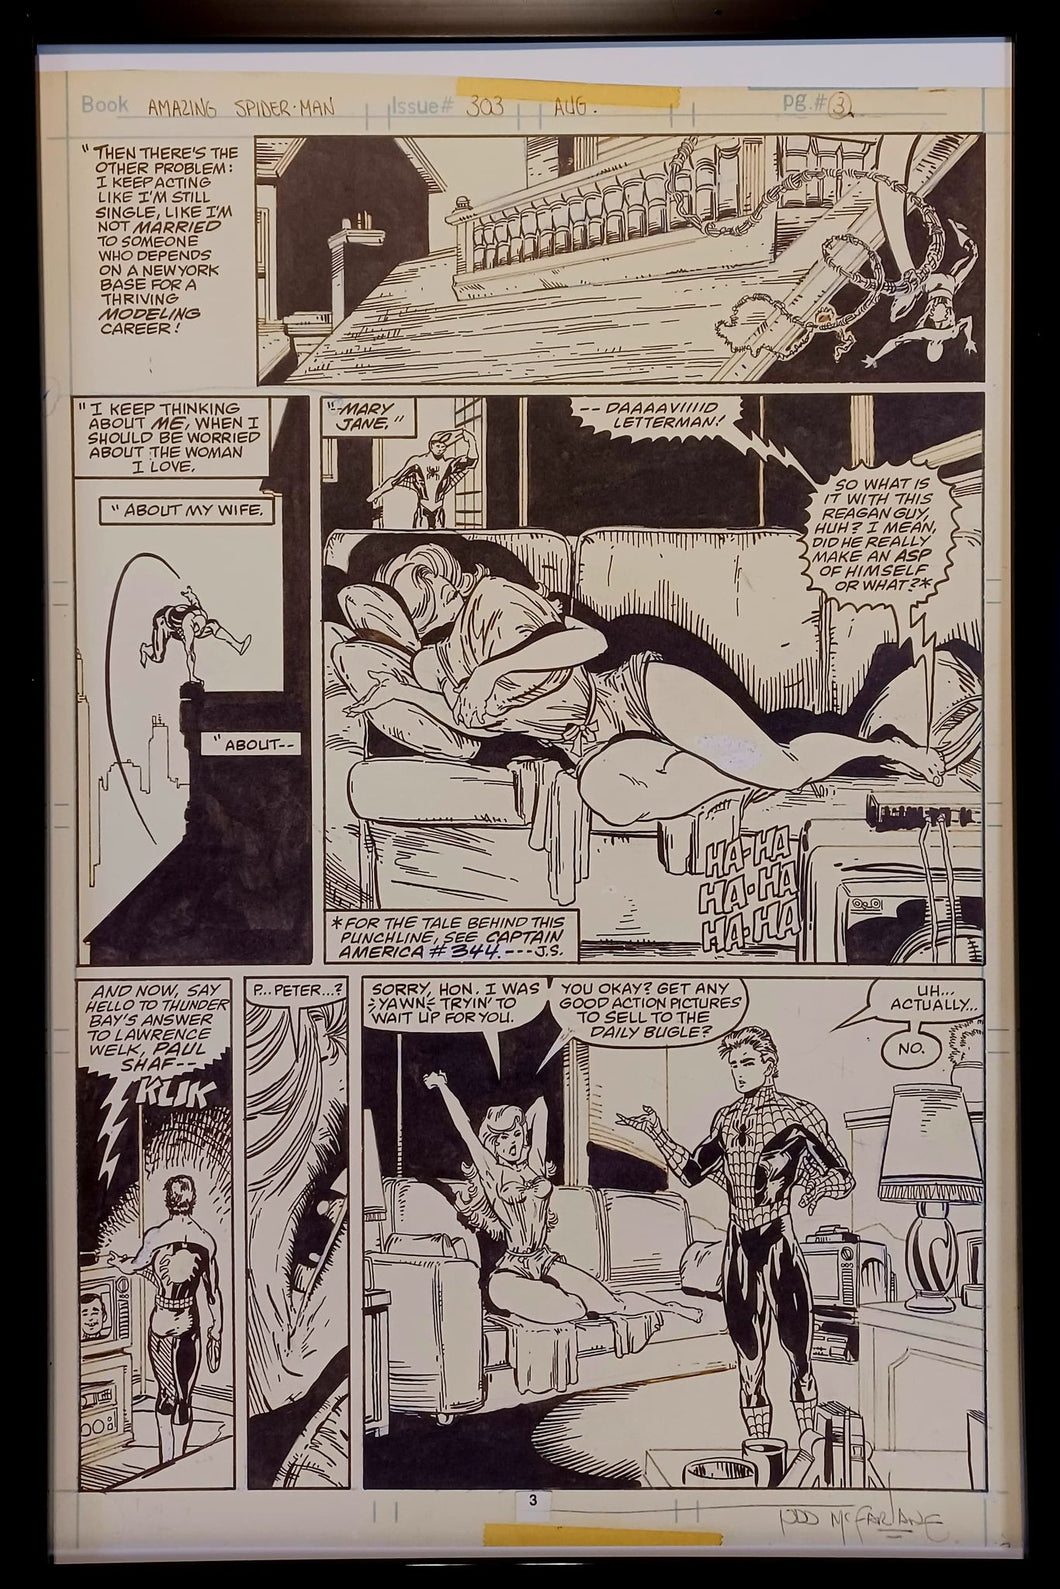 Amazing Spider-Man #303 pg. 3 by Todd McFarlane 11x17 FRAMED Original Art Print Comic Poster